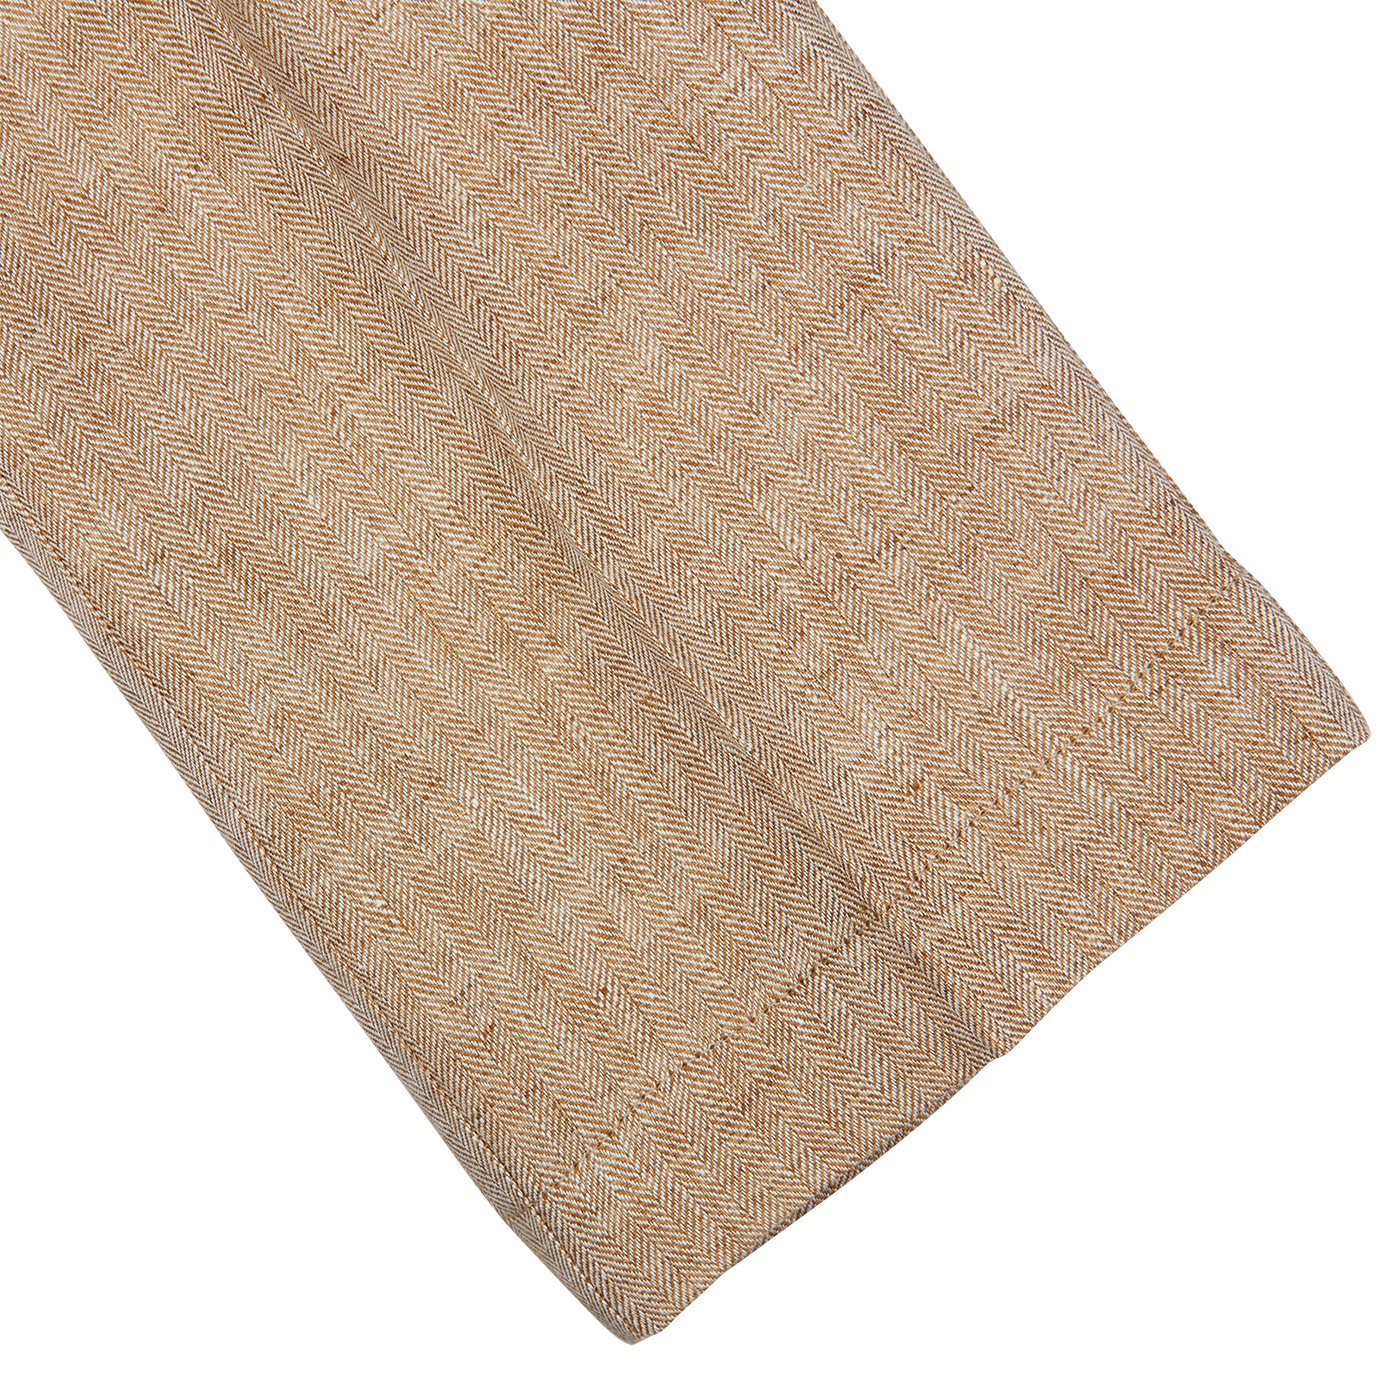 A tan linen drawstring napkin on a white background.
Product Name: Beige Linen Herringbone Drawstring Trousers
Brand Name: Berwich